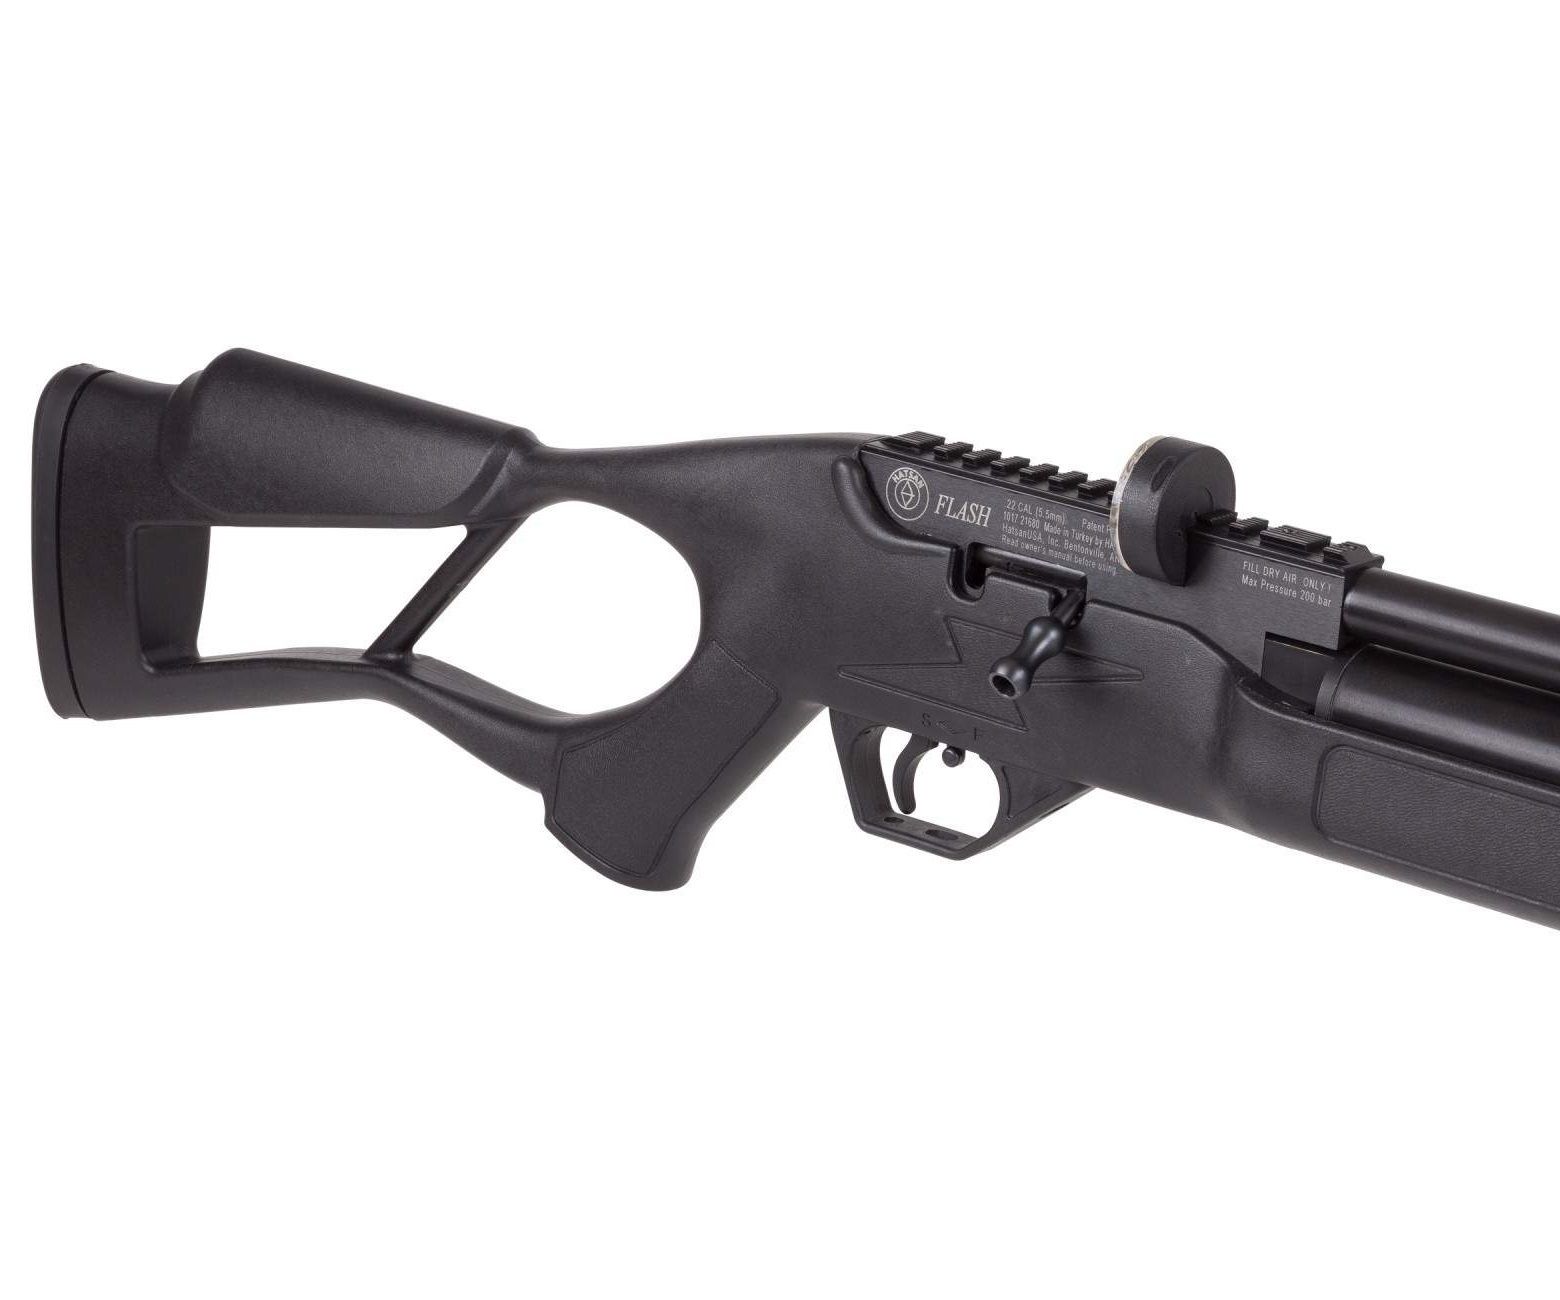 Пневматическая винтовка Hatsan Flash QE (PCP, модератор, 3 Дж) 6,35 мм, изображение 3